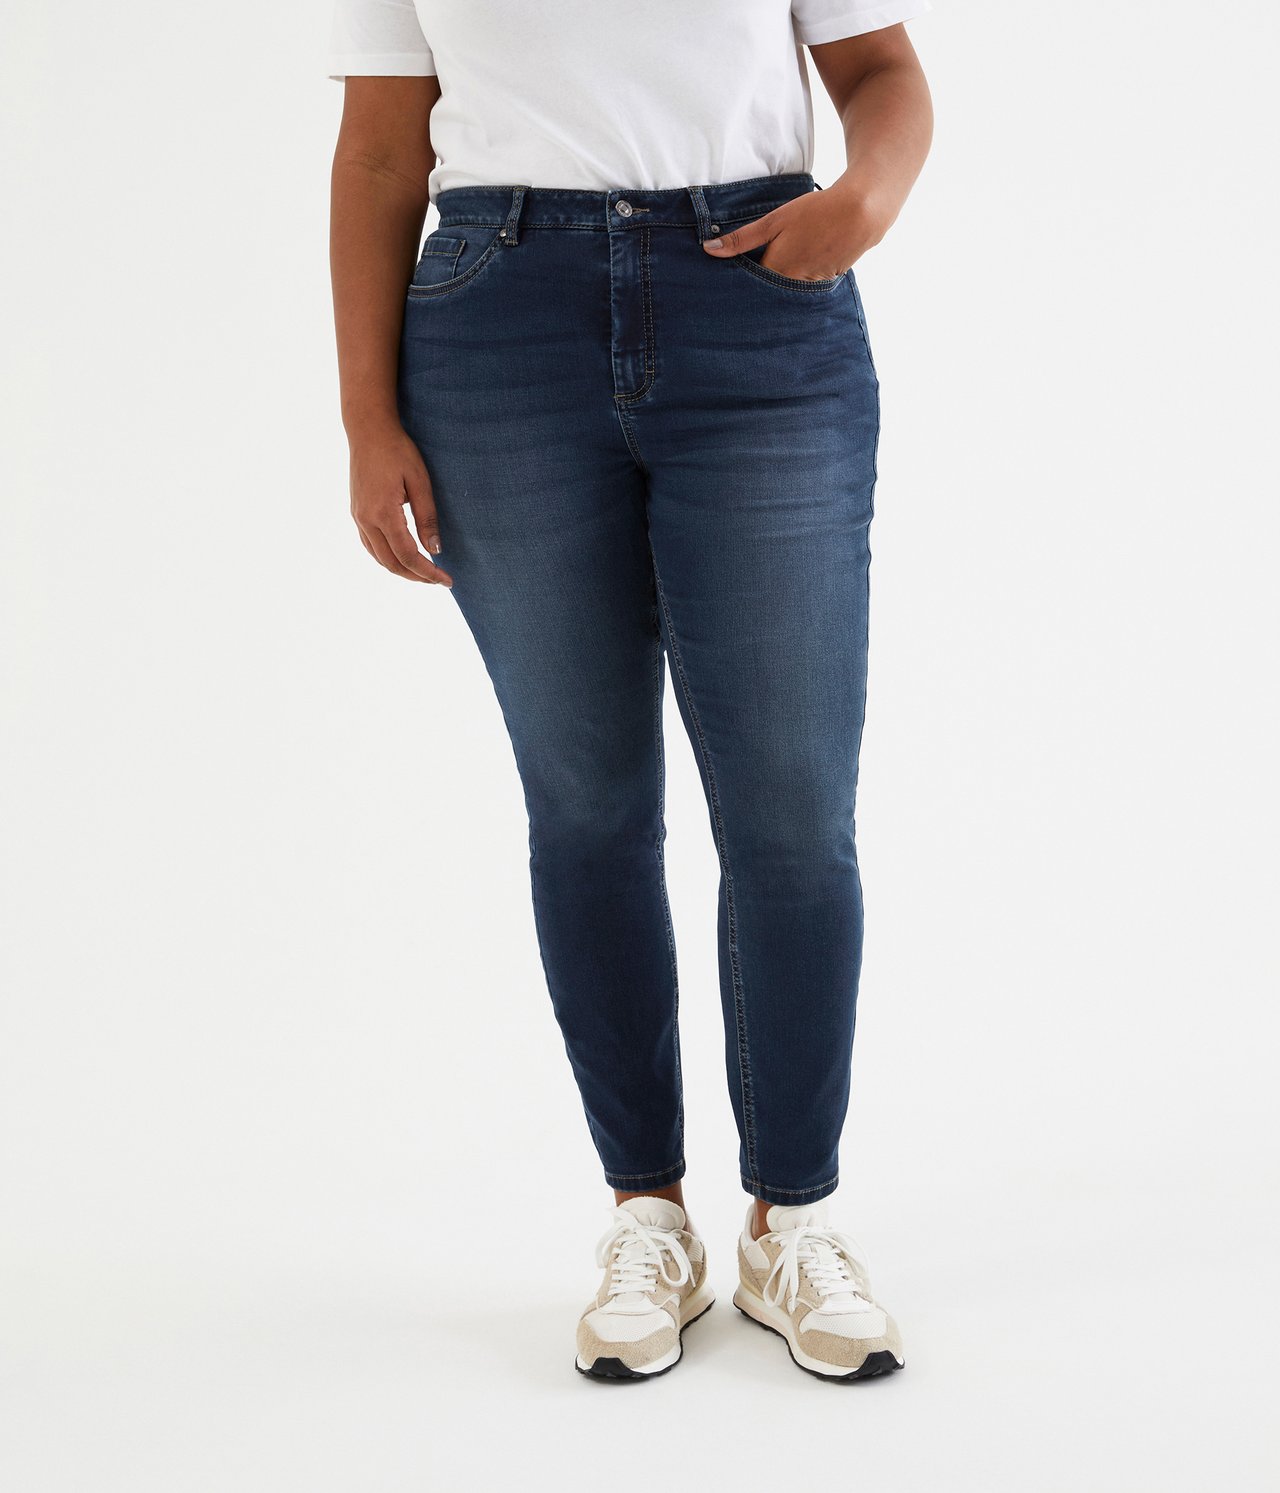 Ebba slim jeans - Mörk denim - 182cm / Storlek: 50 - 3